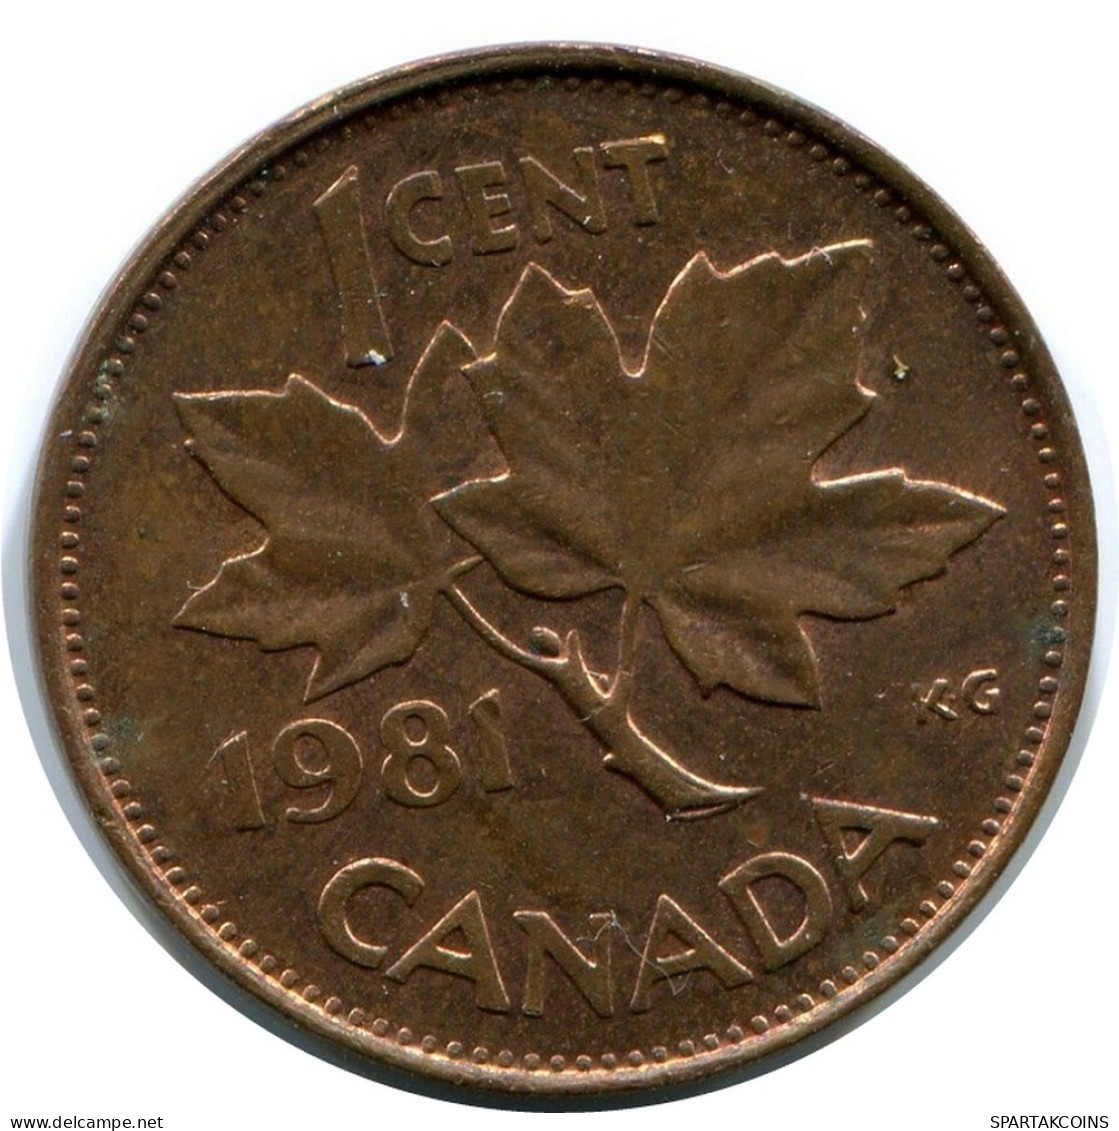 1 CENT 1981 CANADA Coin #AX382.U.A - Canada